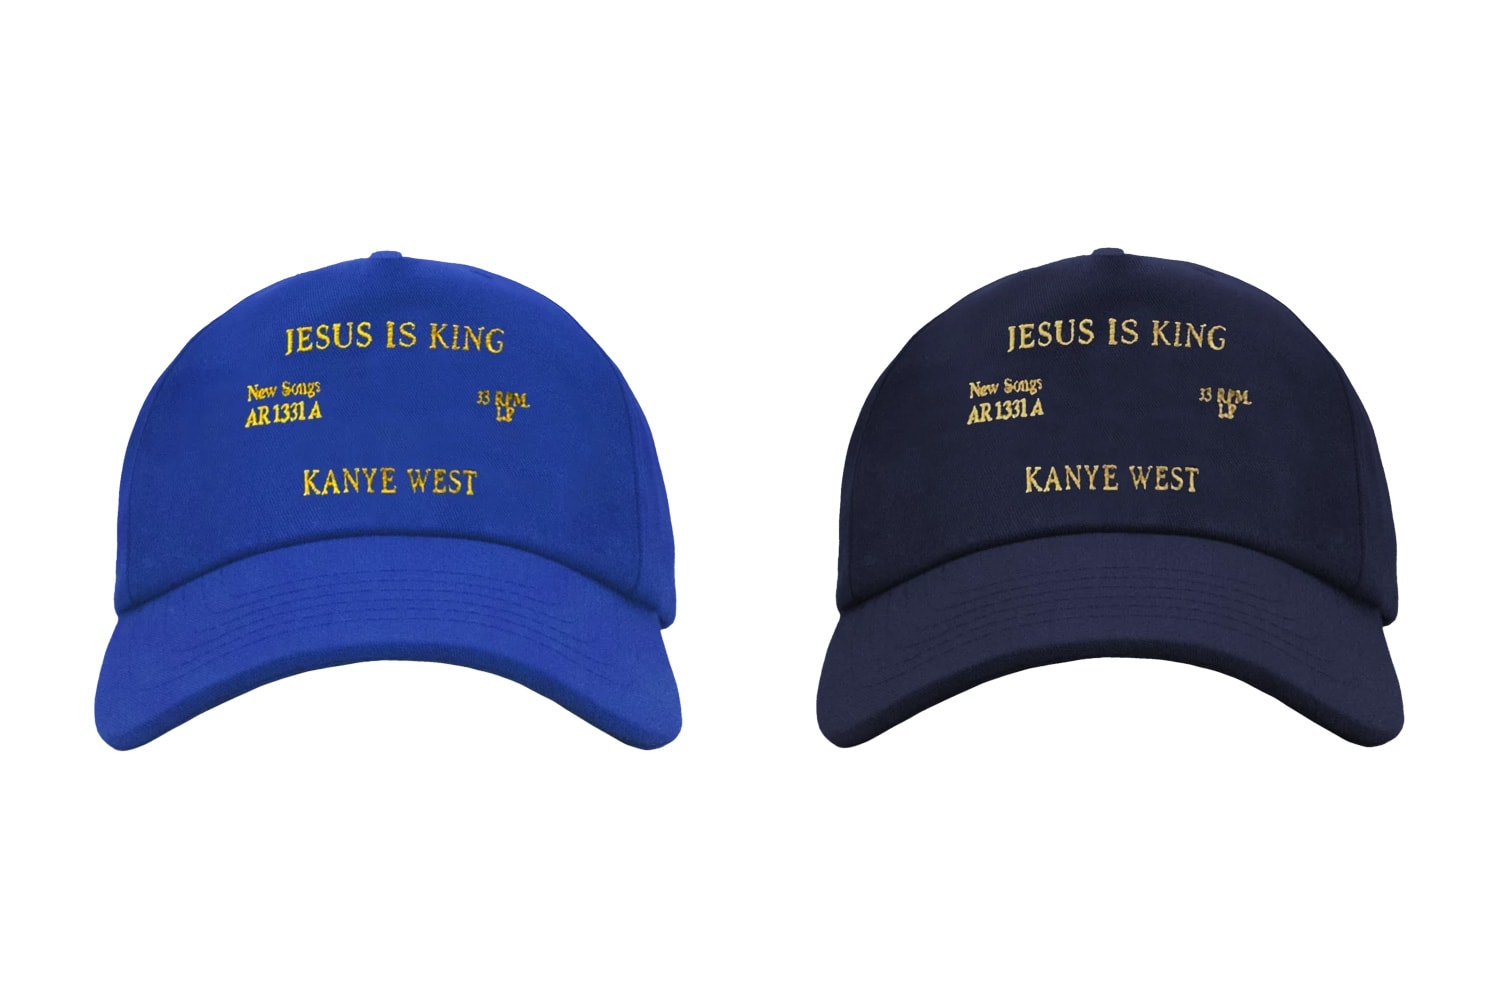 Kanye West Releases Official 'Jesus Is King' Merchandise album clothes mock neck t-shirts longsleeves crewnecks hooded sweatshirts vinyl record LP buy now release info drop date price popup pop up shop 